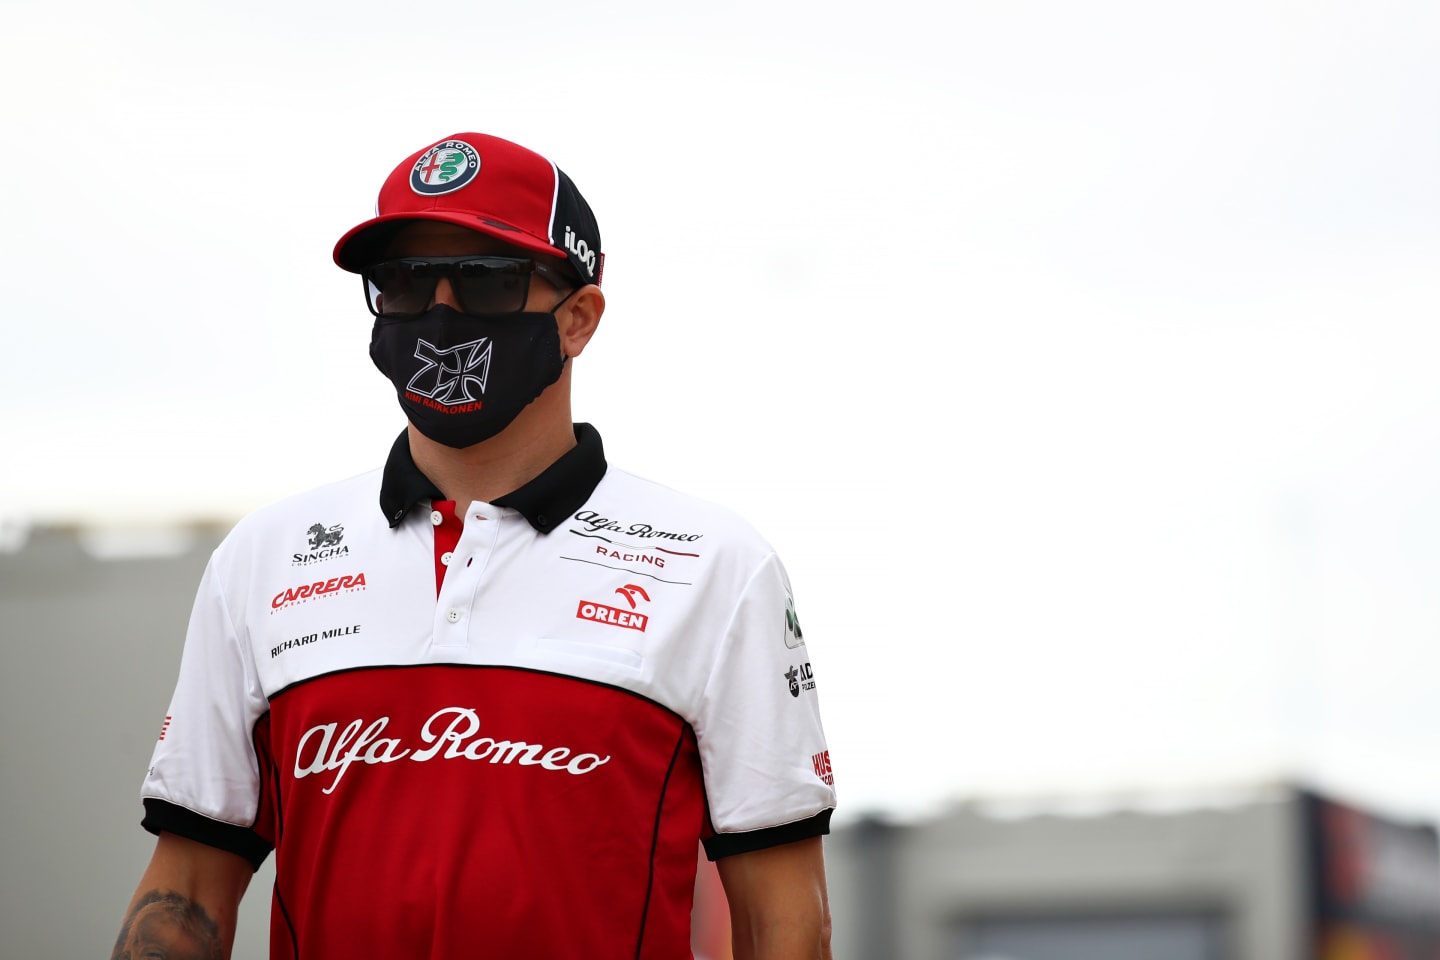 NORTHAMPTON, ENGLAND - AUGUST 06: Kimi Raikkonen of Finland and Alfa Romeo Racing walks in the